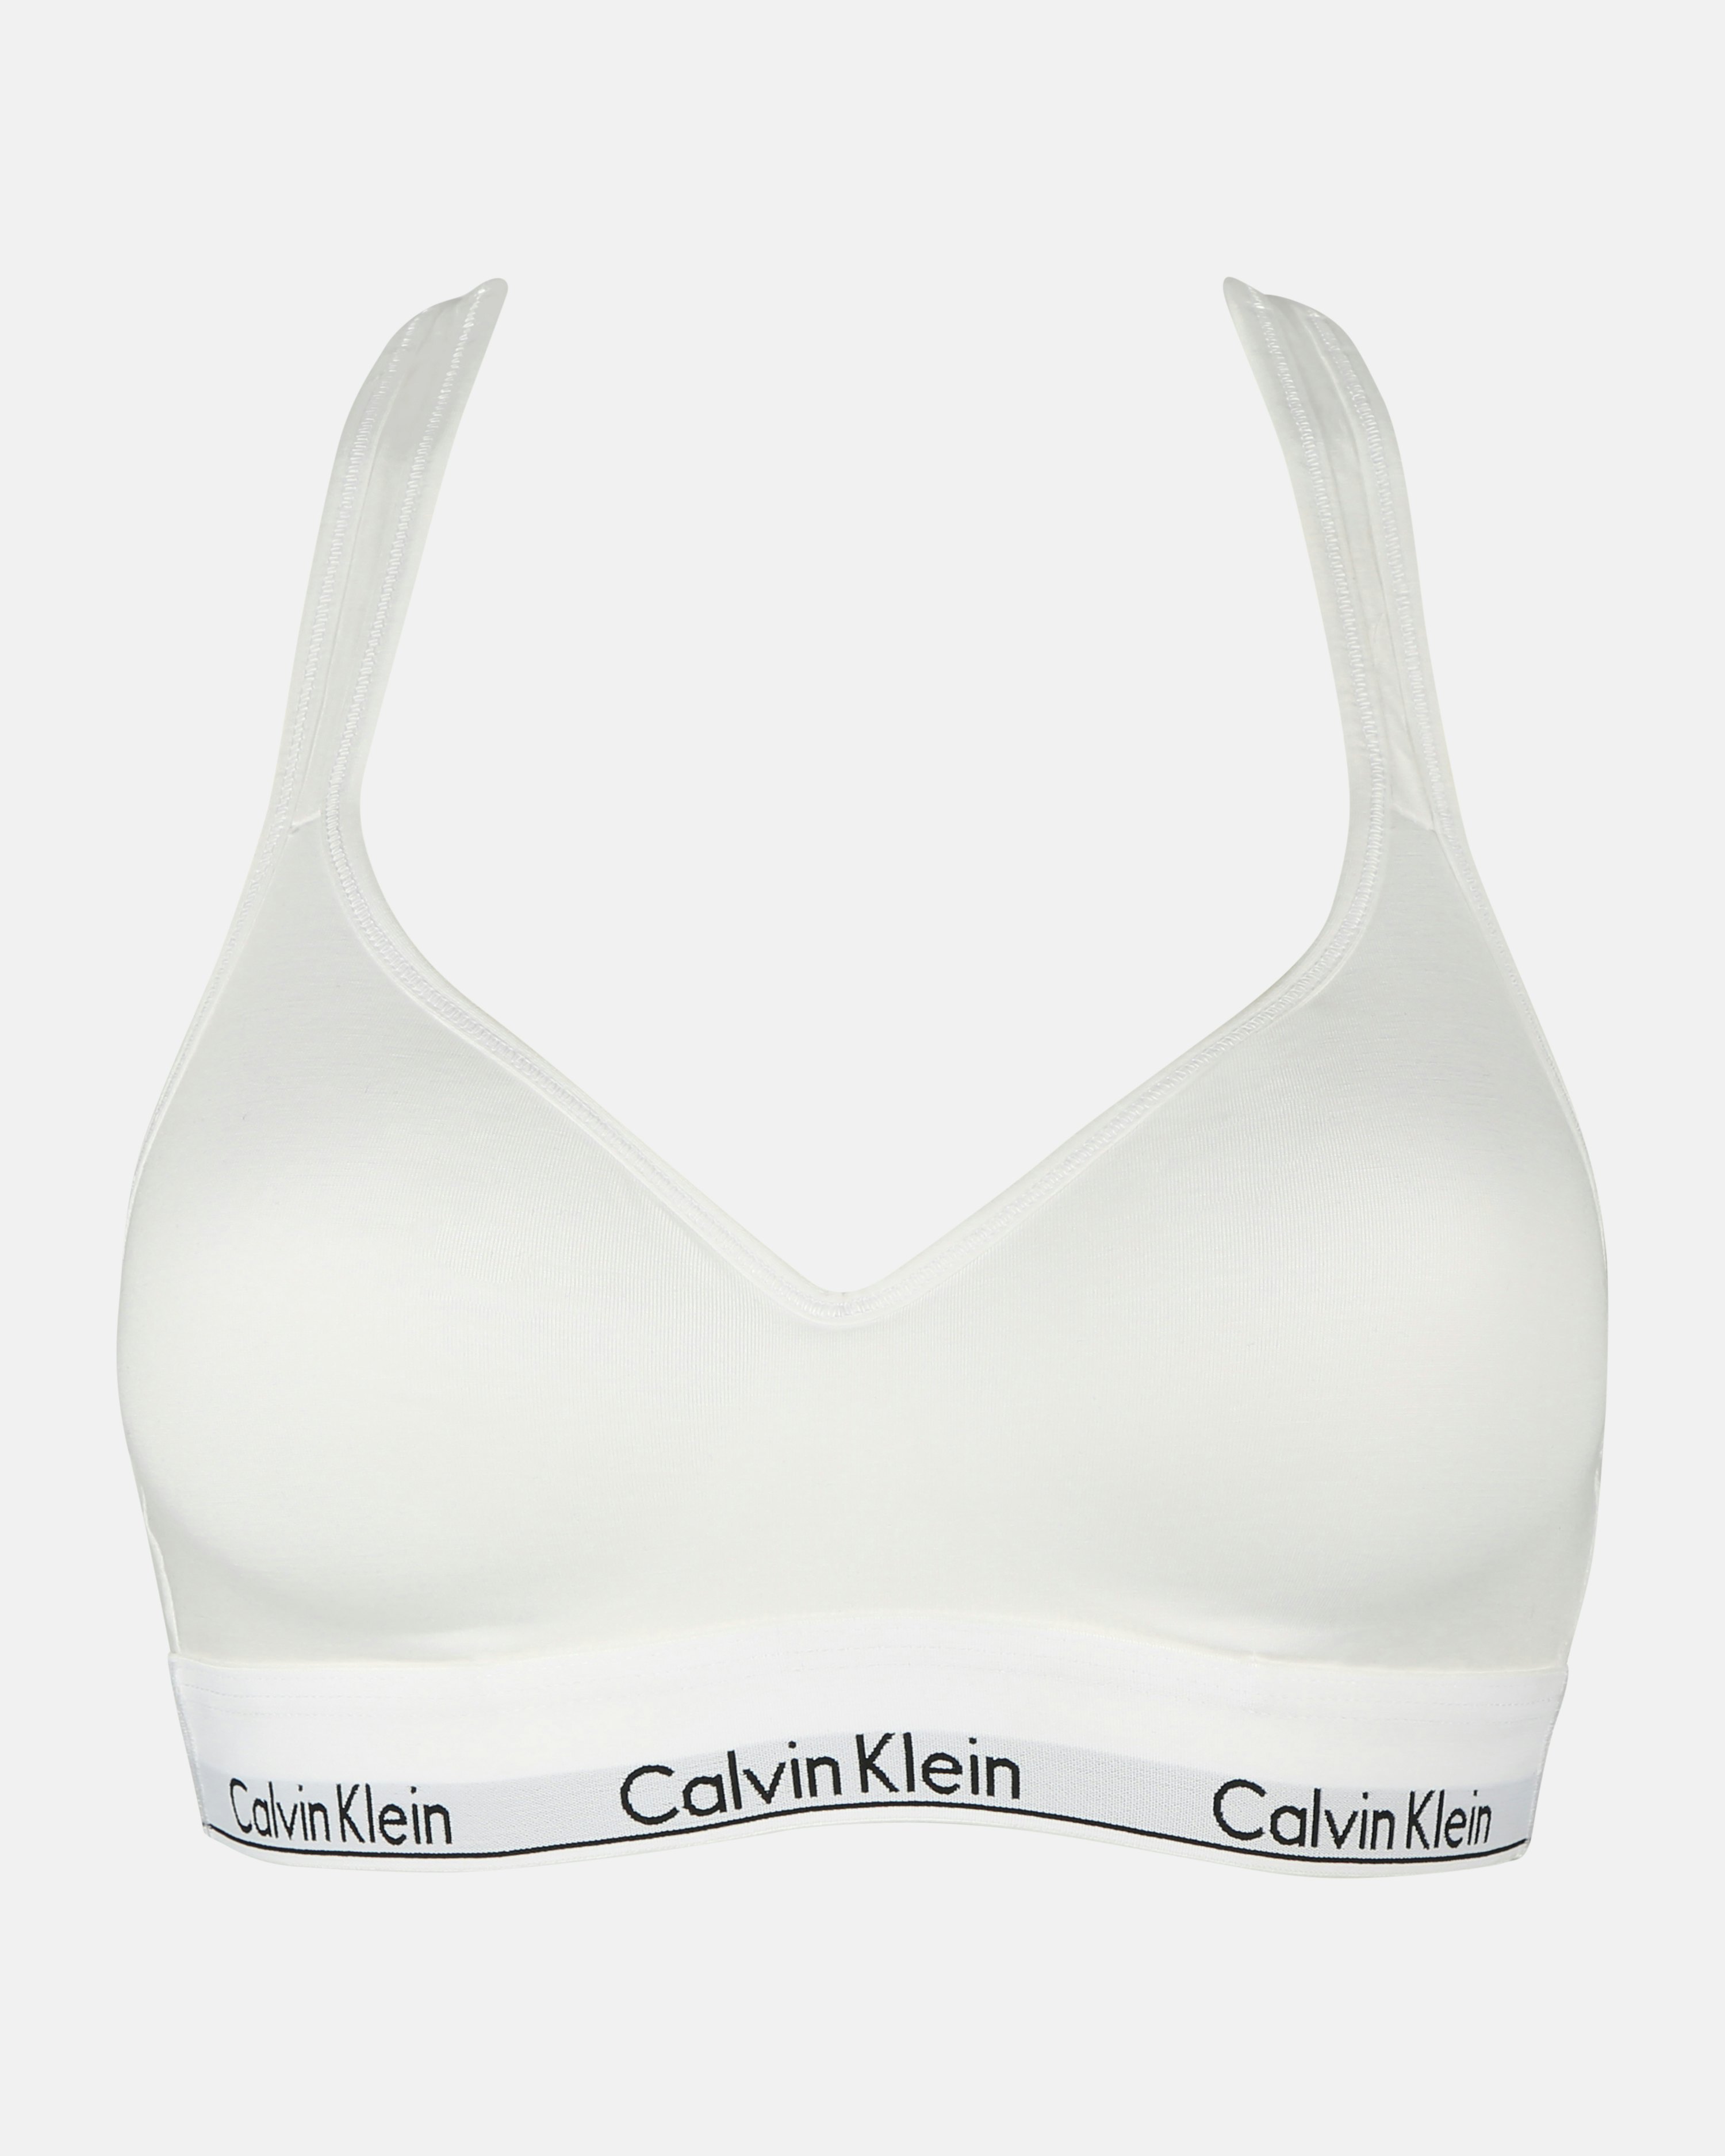 Calvin Klein White Lift Bralette Modern Cotton. Size M - $15 - From